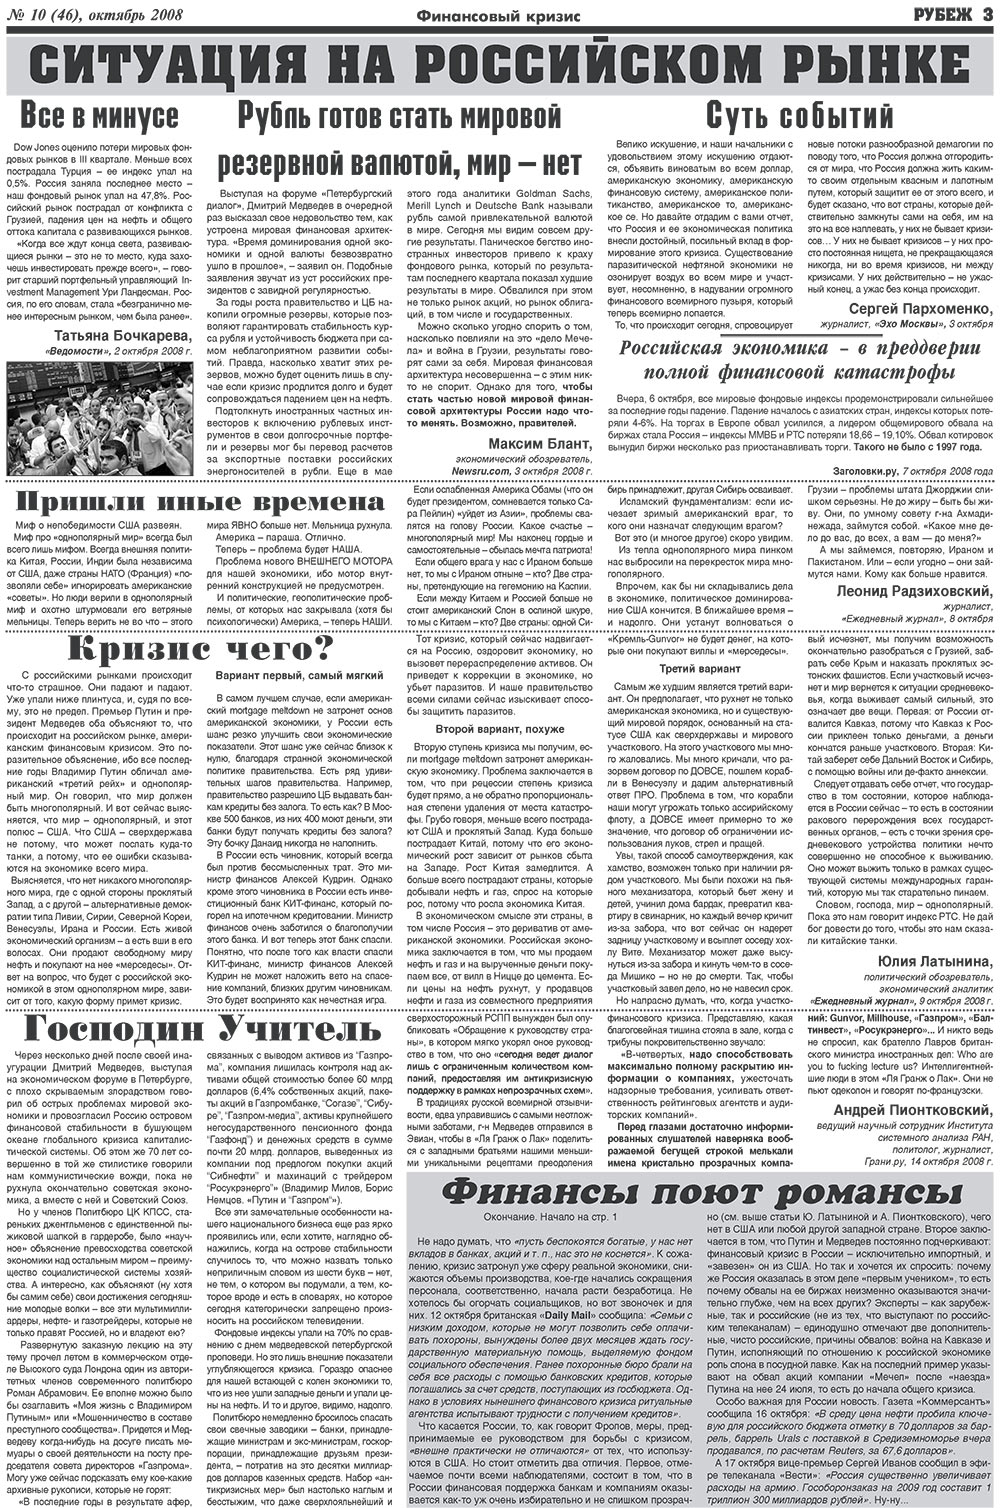 Рубеж, газета. 2008 №10 стр.3